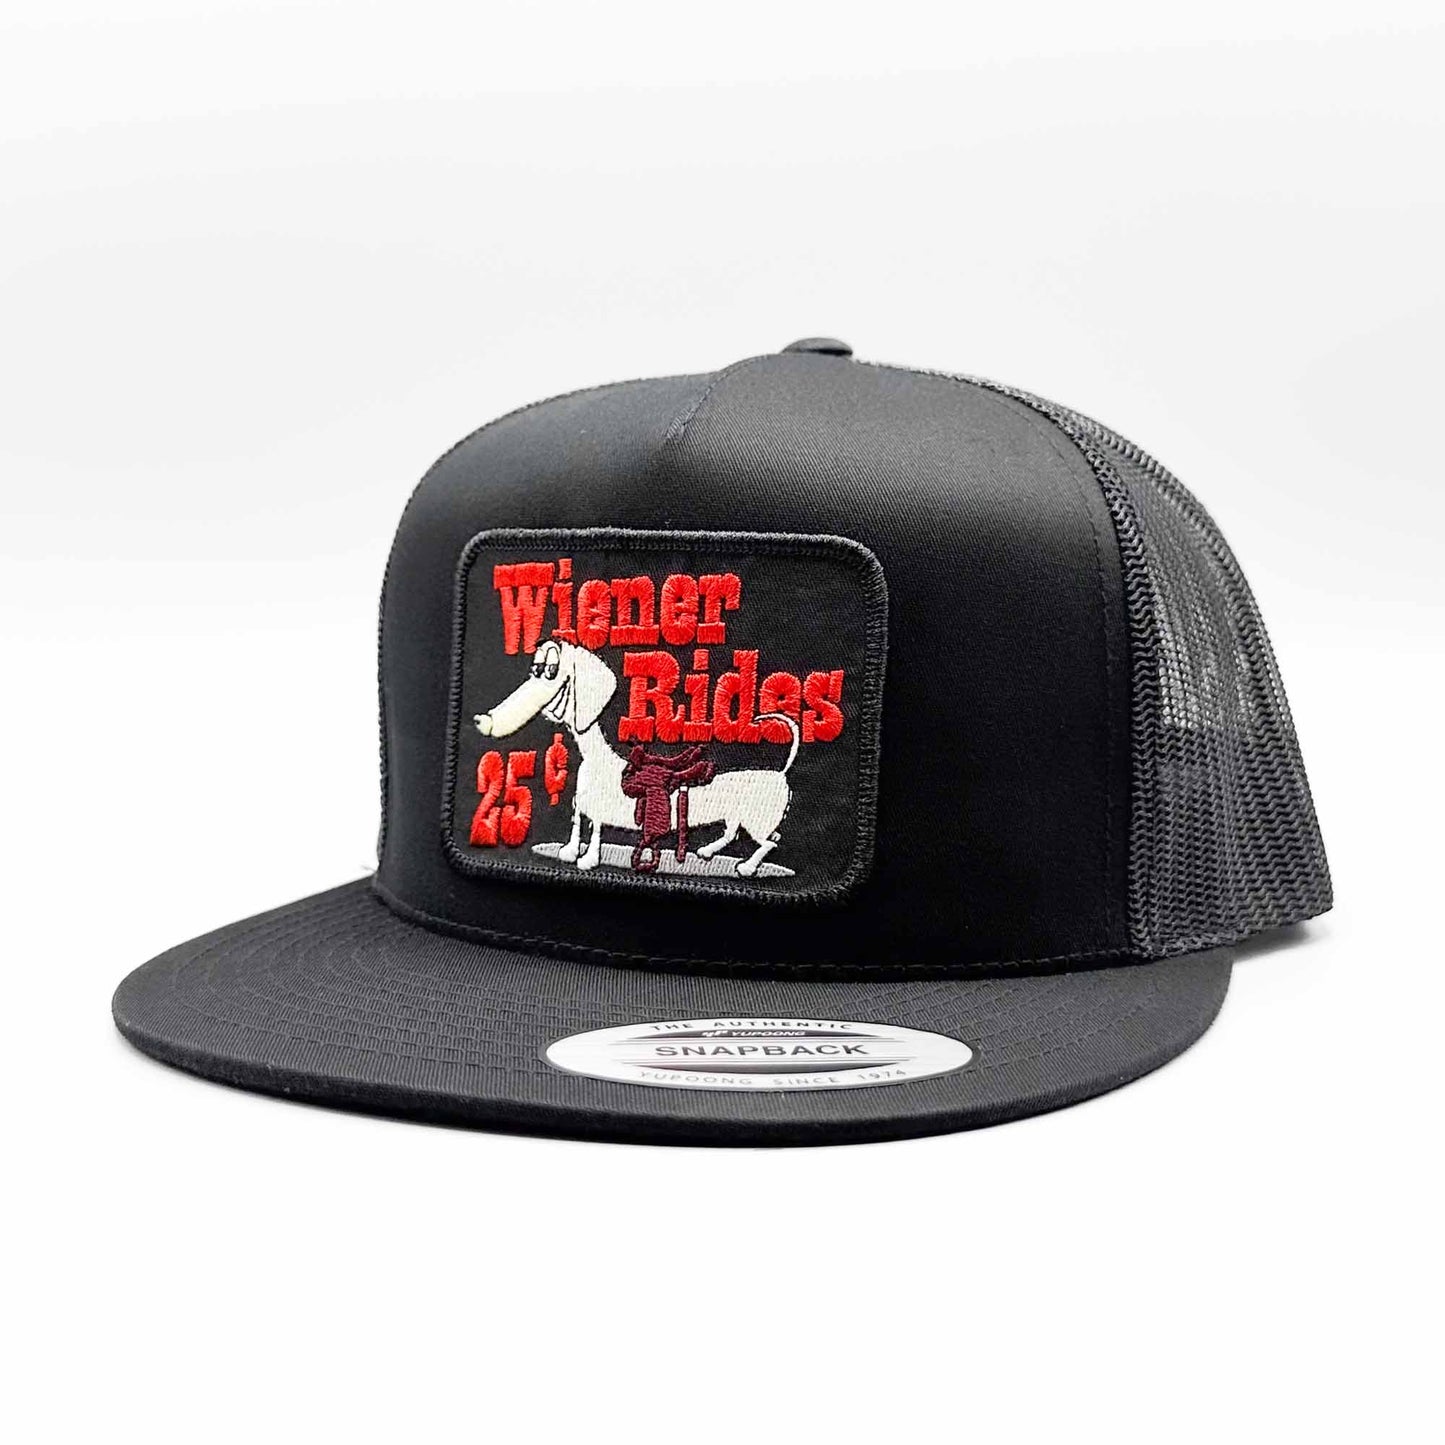 Wiener Rides 25 Cents All Black Trucker Hat